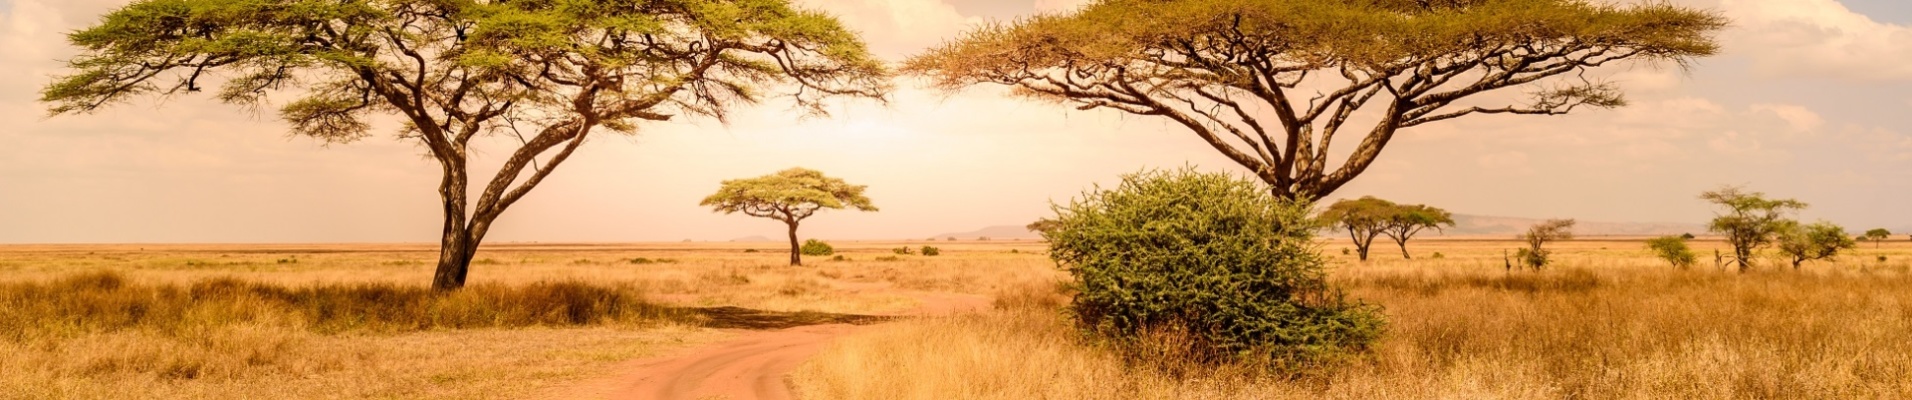 parc serengeti tanzanie